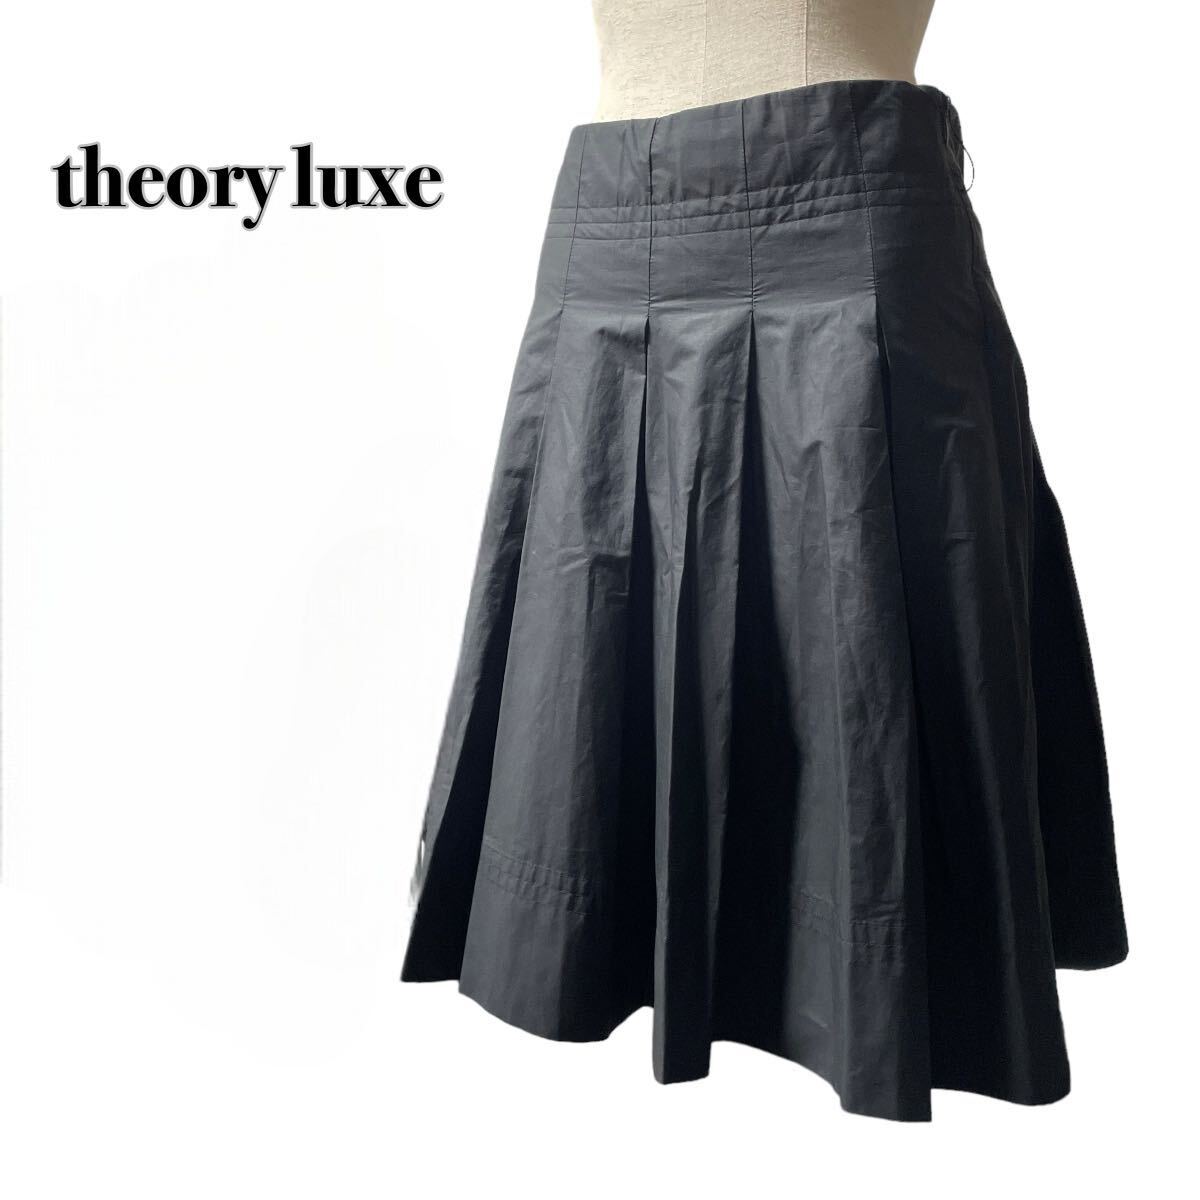 theory luxe セオリーリュクス フレア プリーツスカート 黒ブラック36 S_画像1